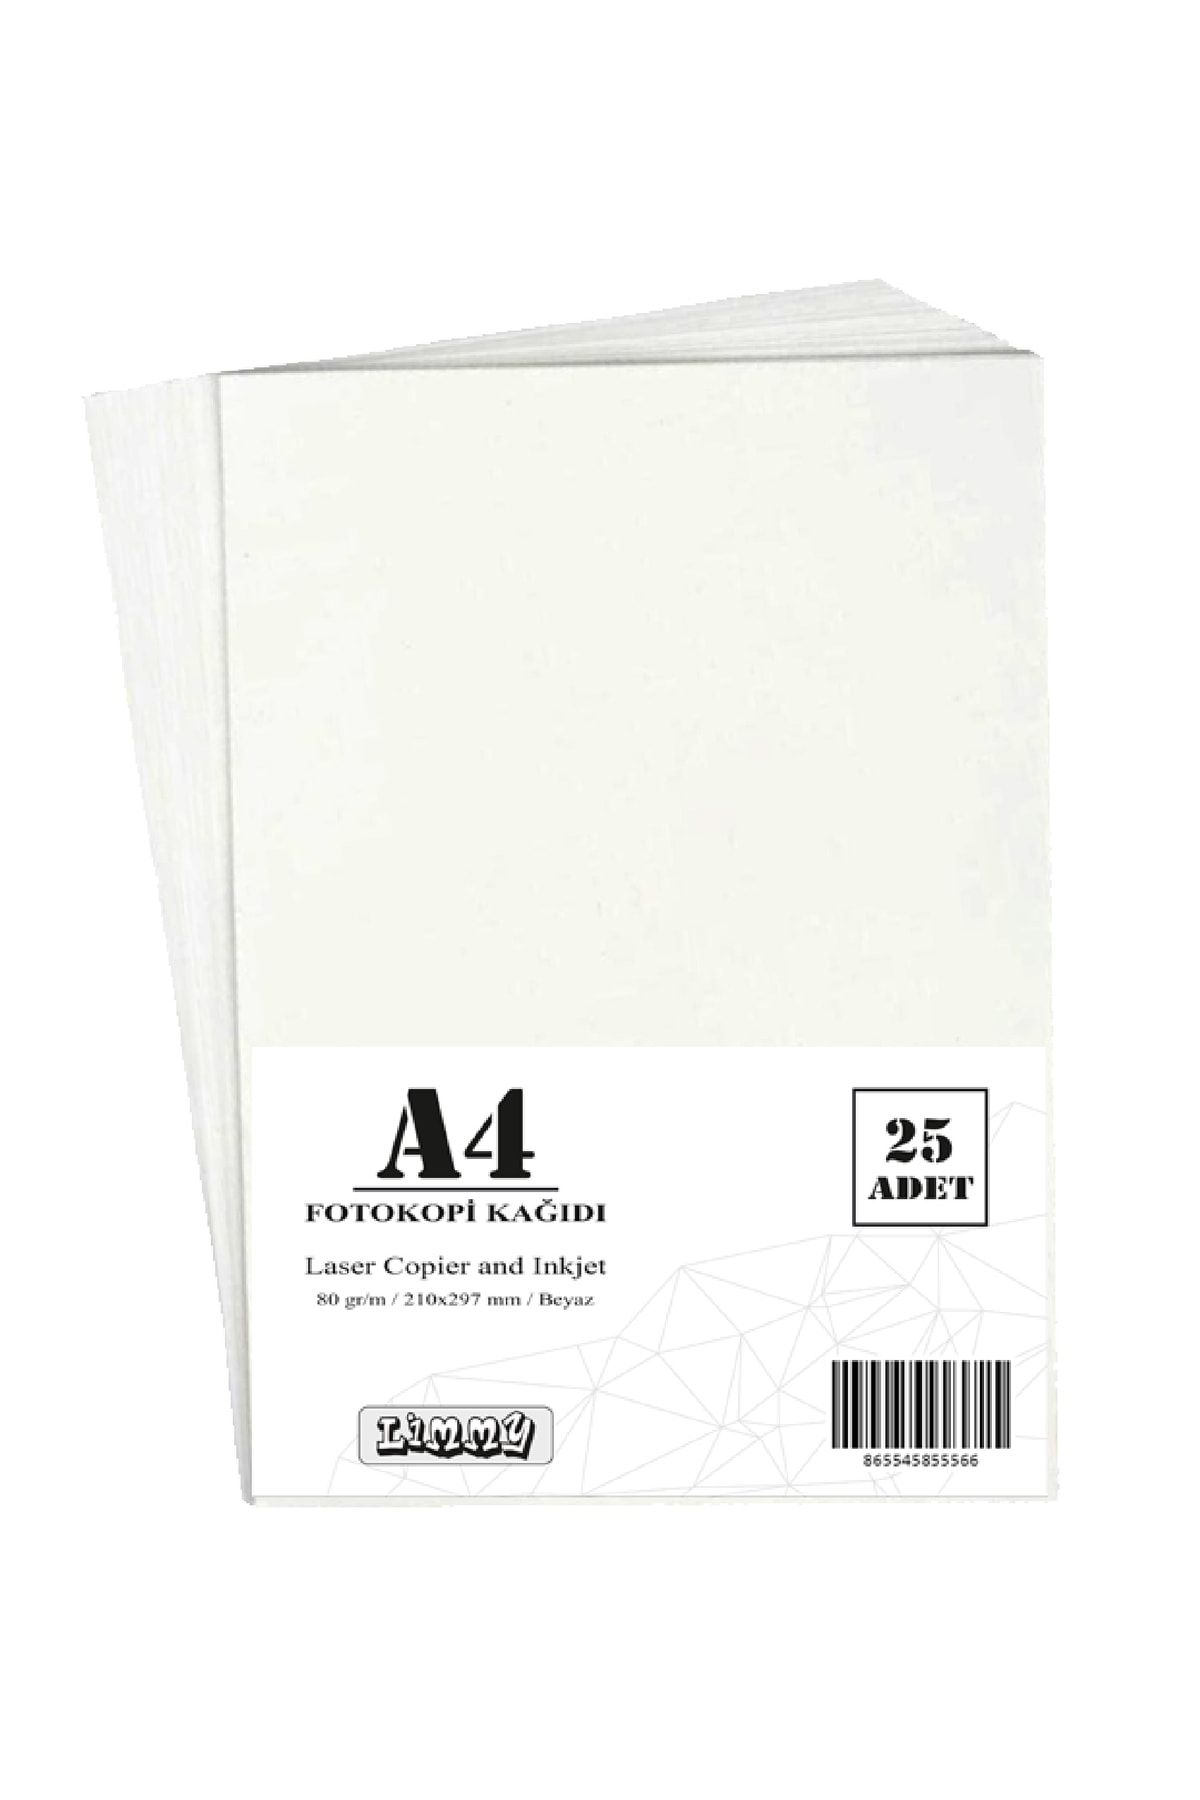 Limmy A4 Kağıdı 80 G/m Beyaz Fotokopi Kağıdı - 25 Adet